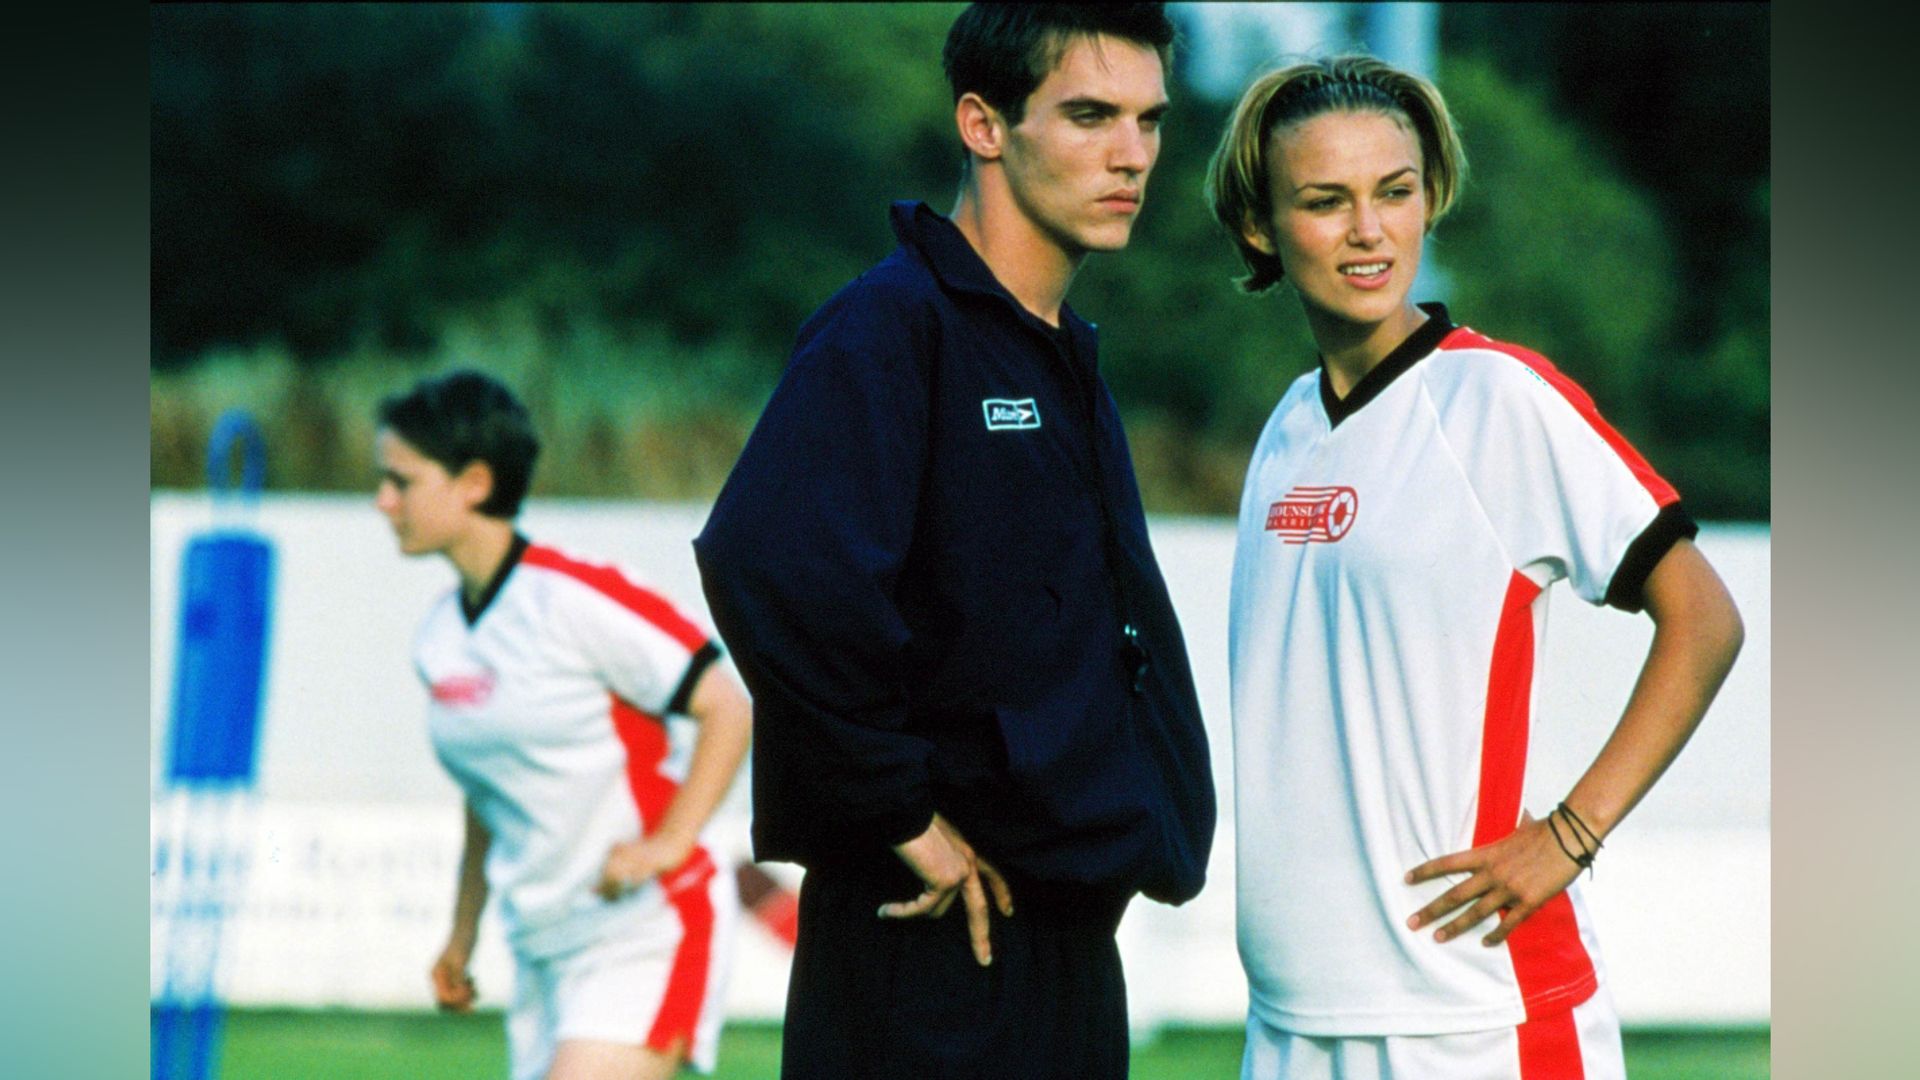 Jonathan Rhys Meyers in the film “Bend It Like Beckham”